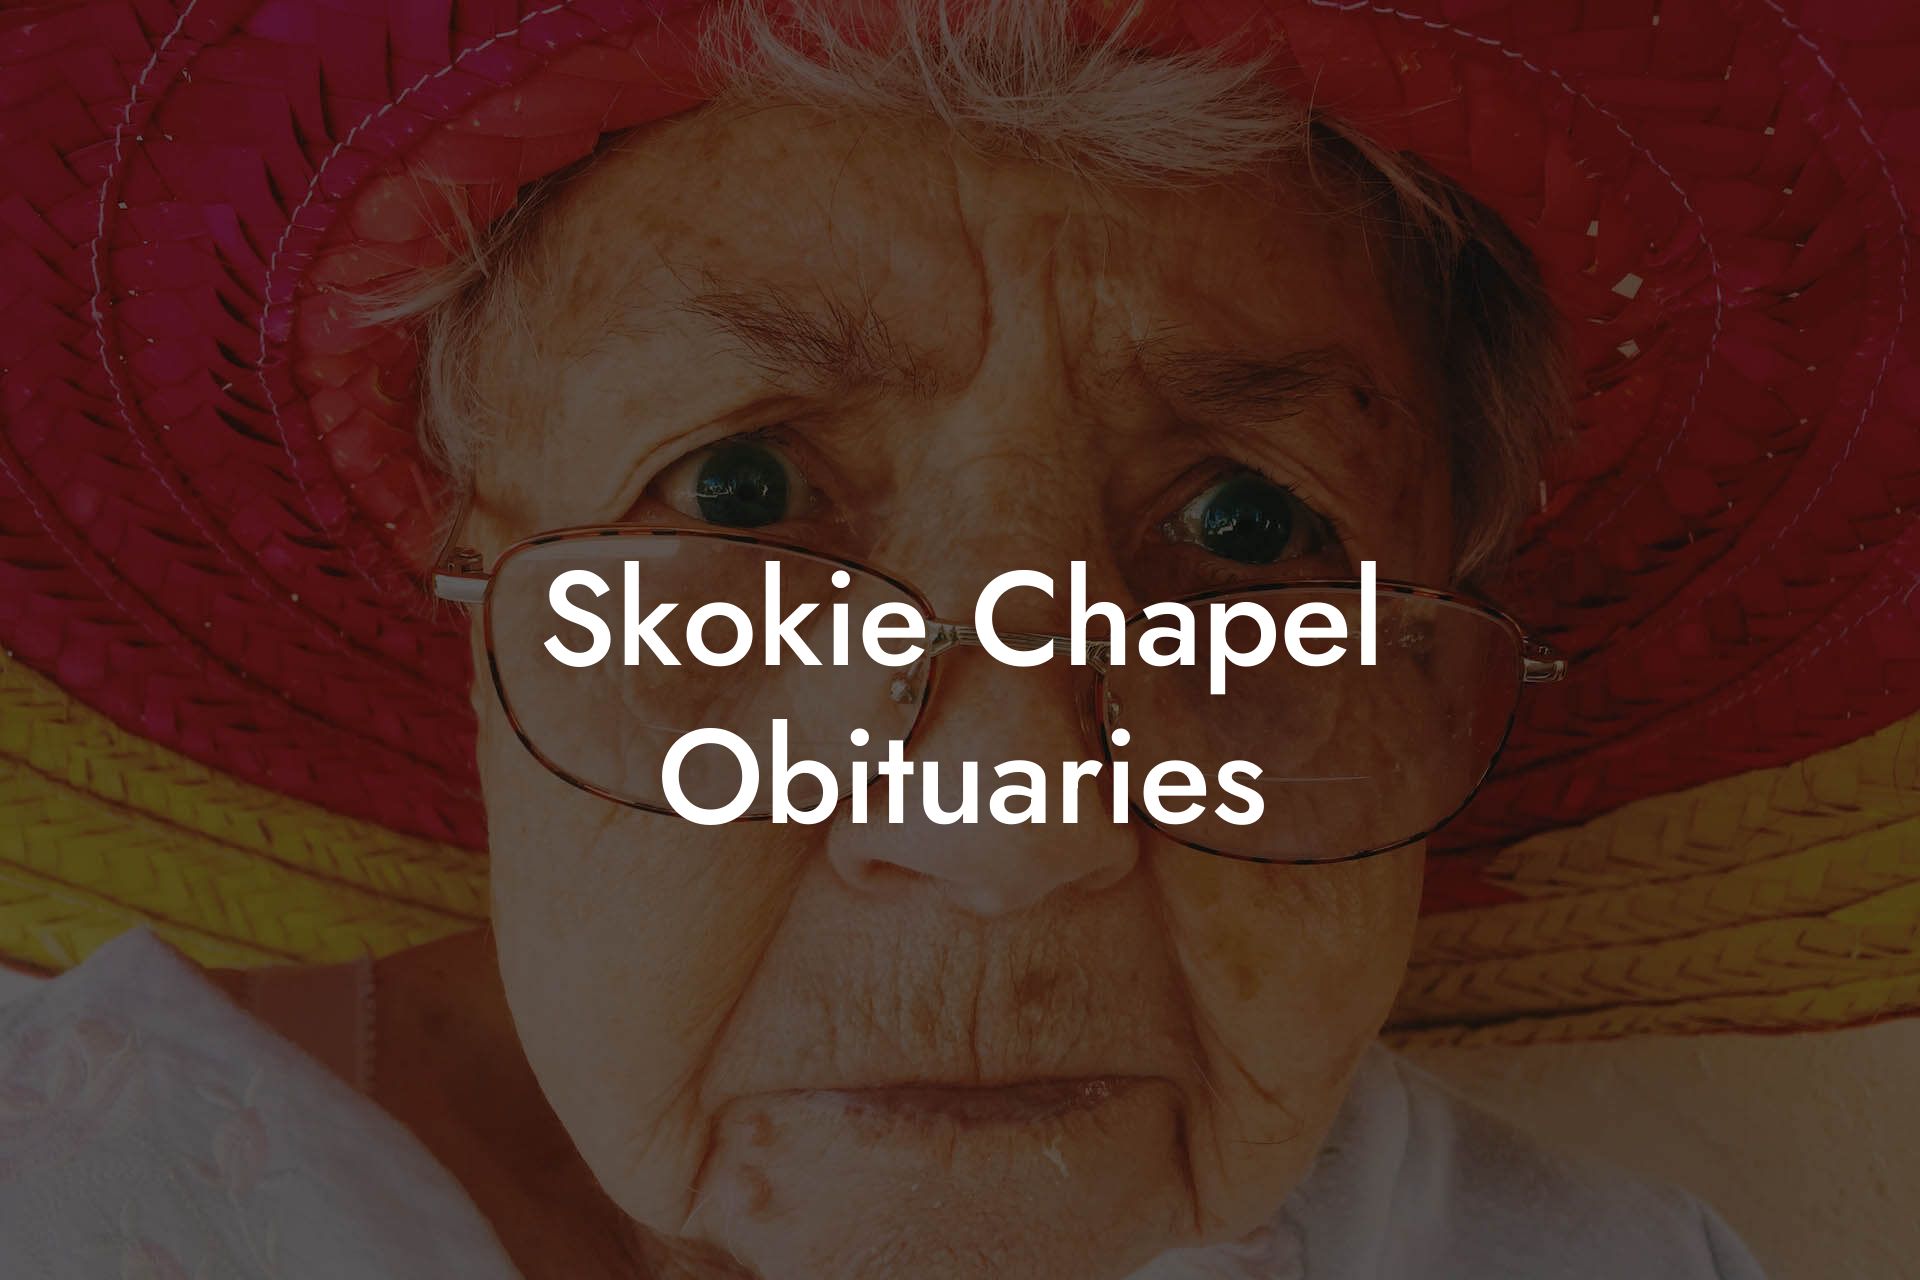 Skokie Chapel Obituaries